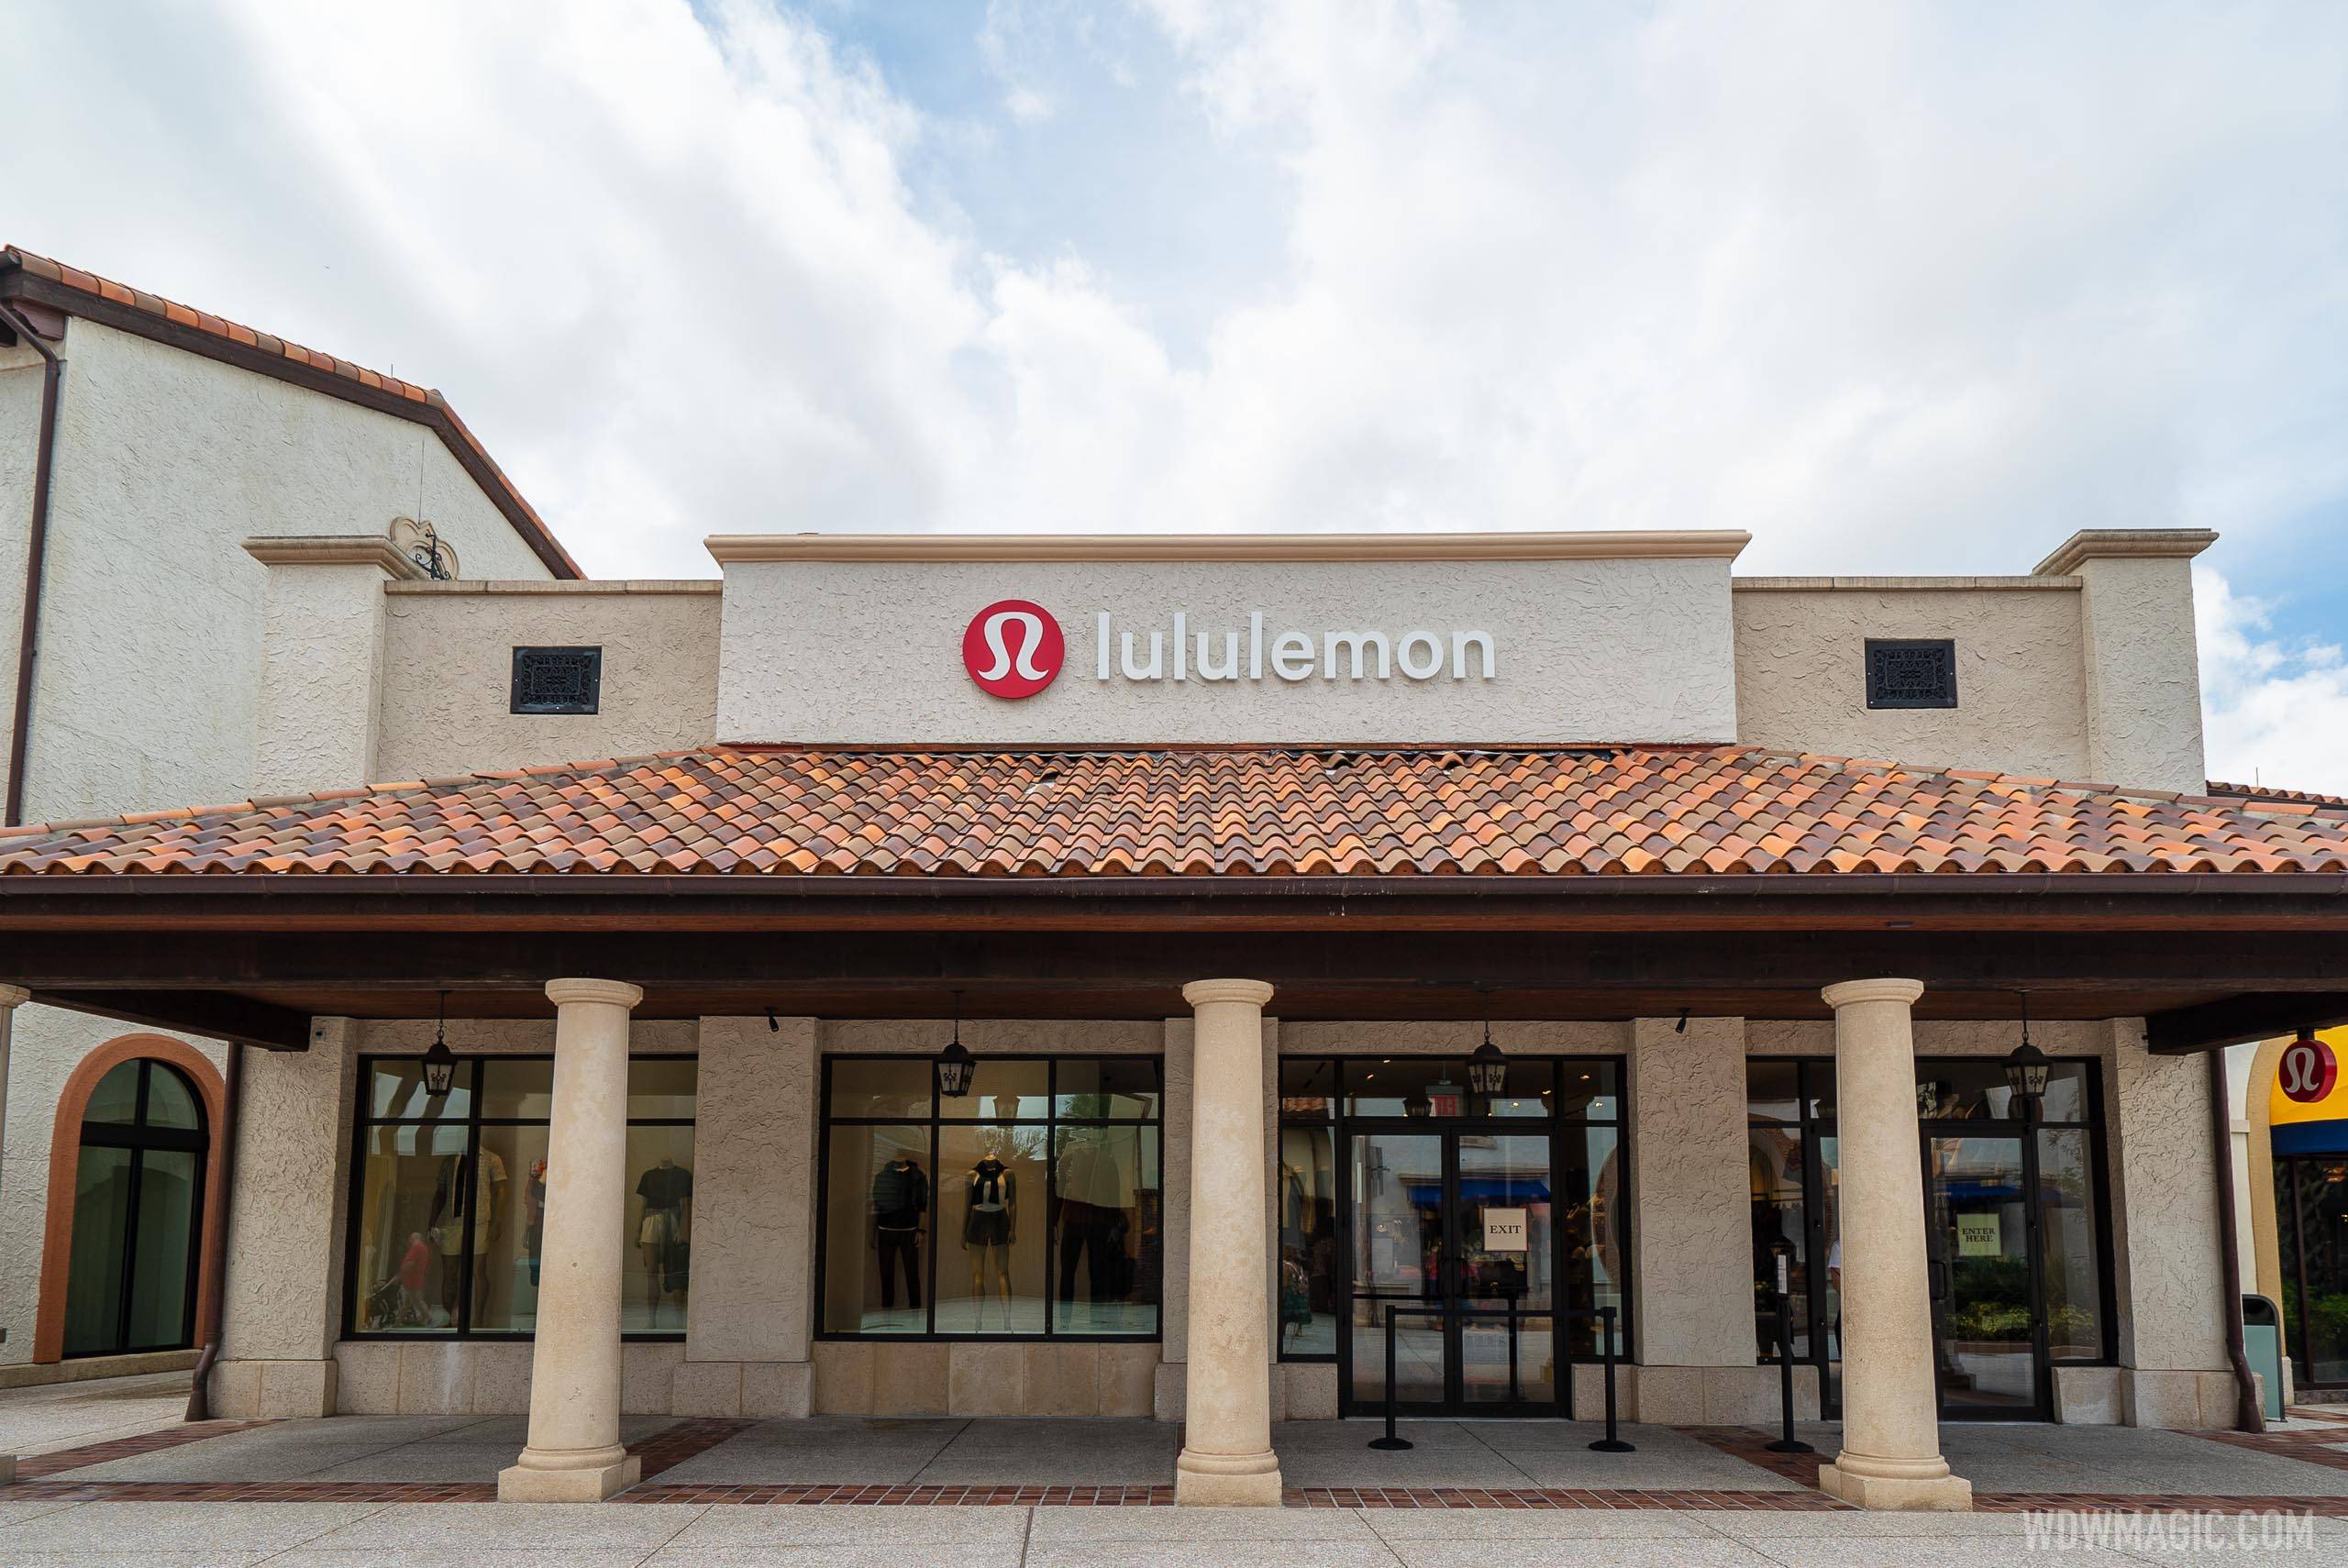 PHOTOS - Lululemon now open at Disney Springs